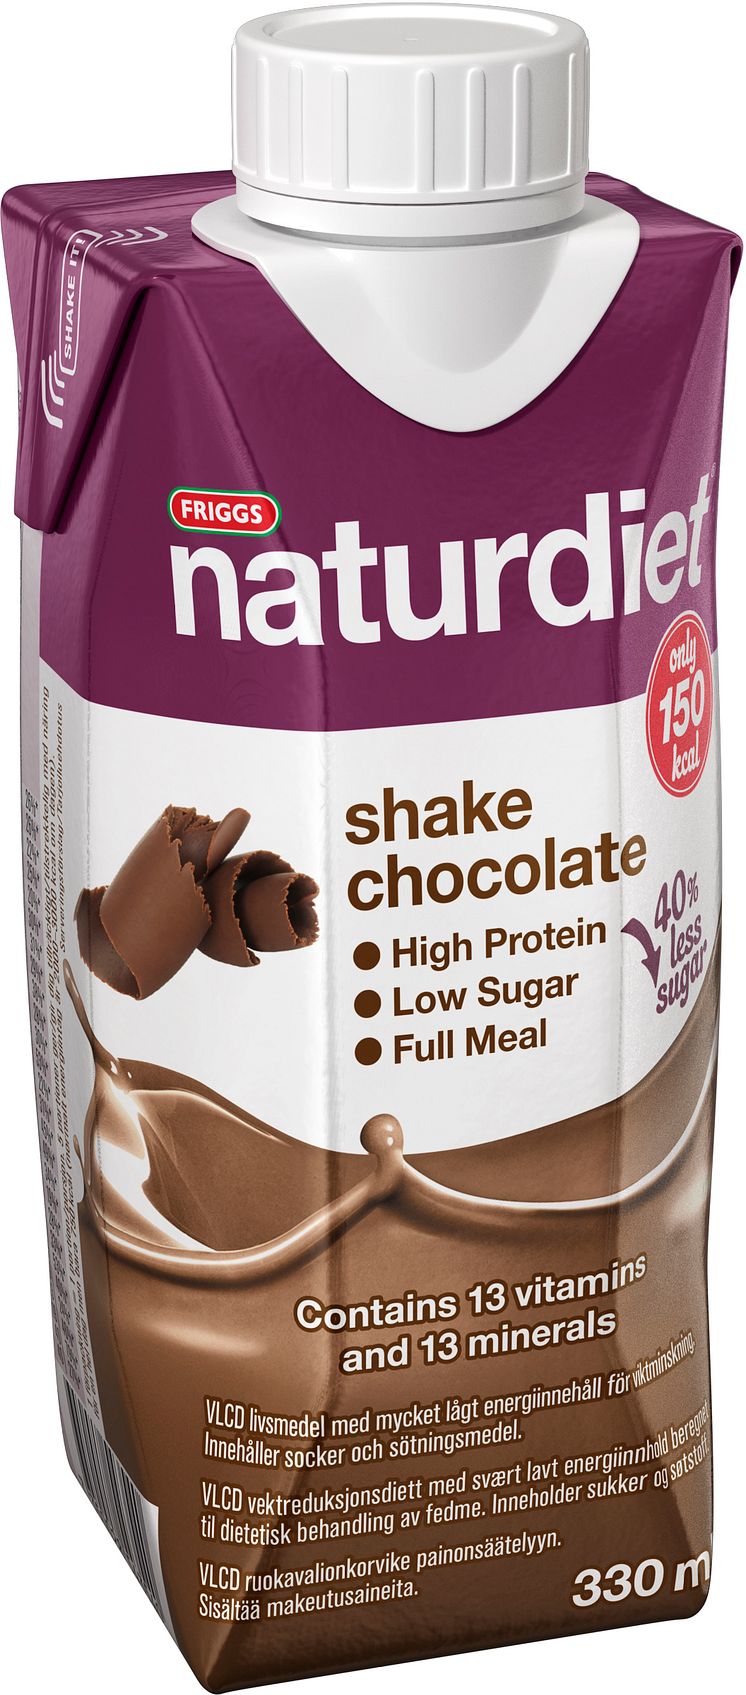 Naturdiet Chocolate shake - nu med mindre socker